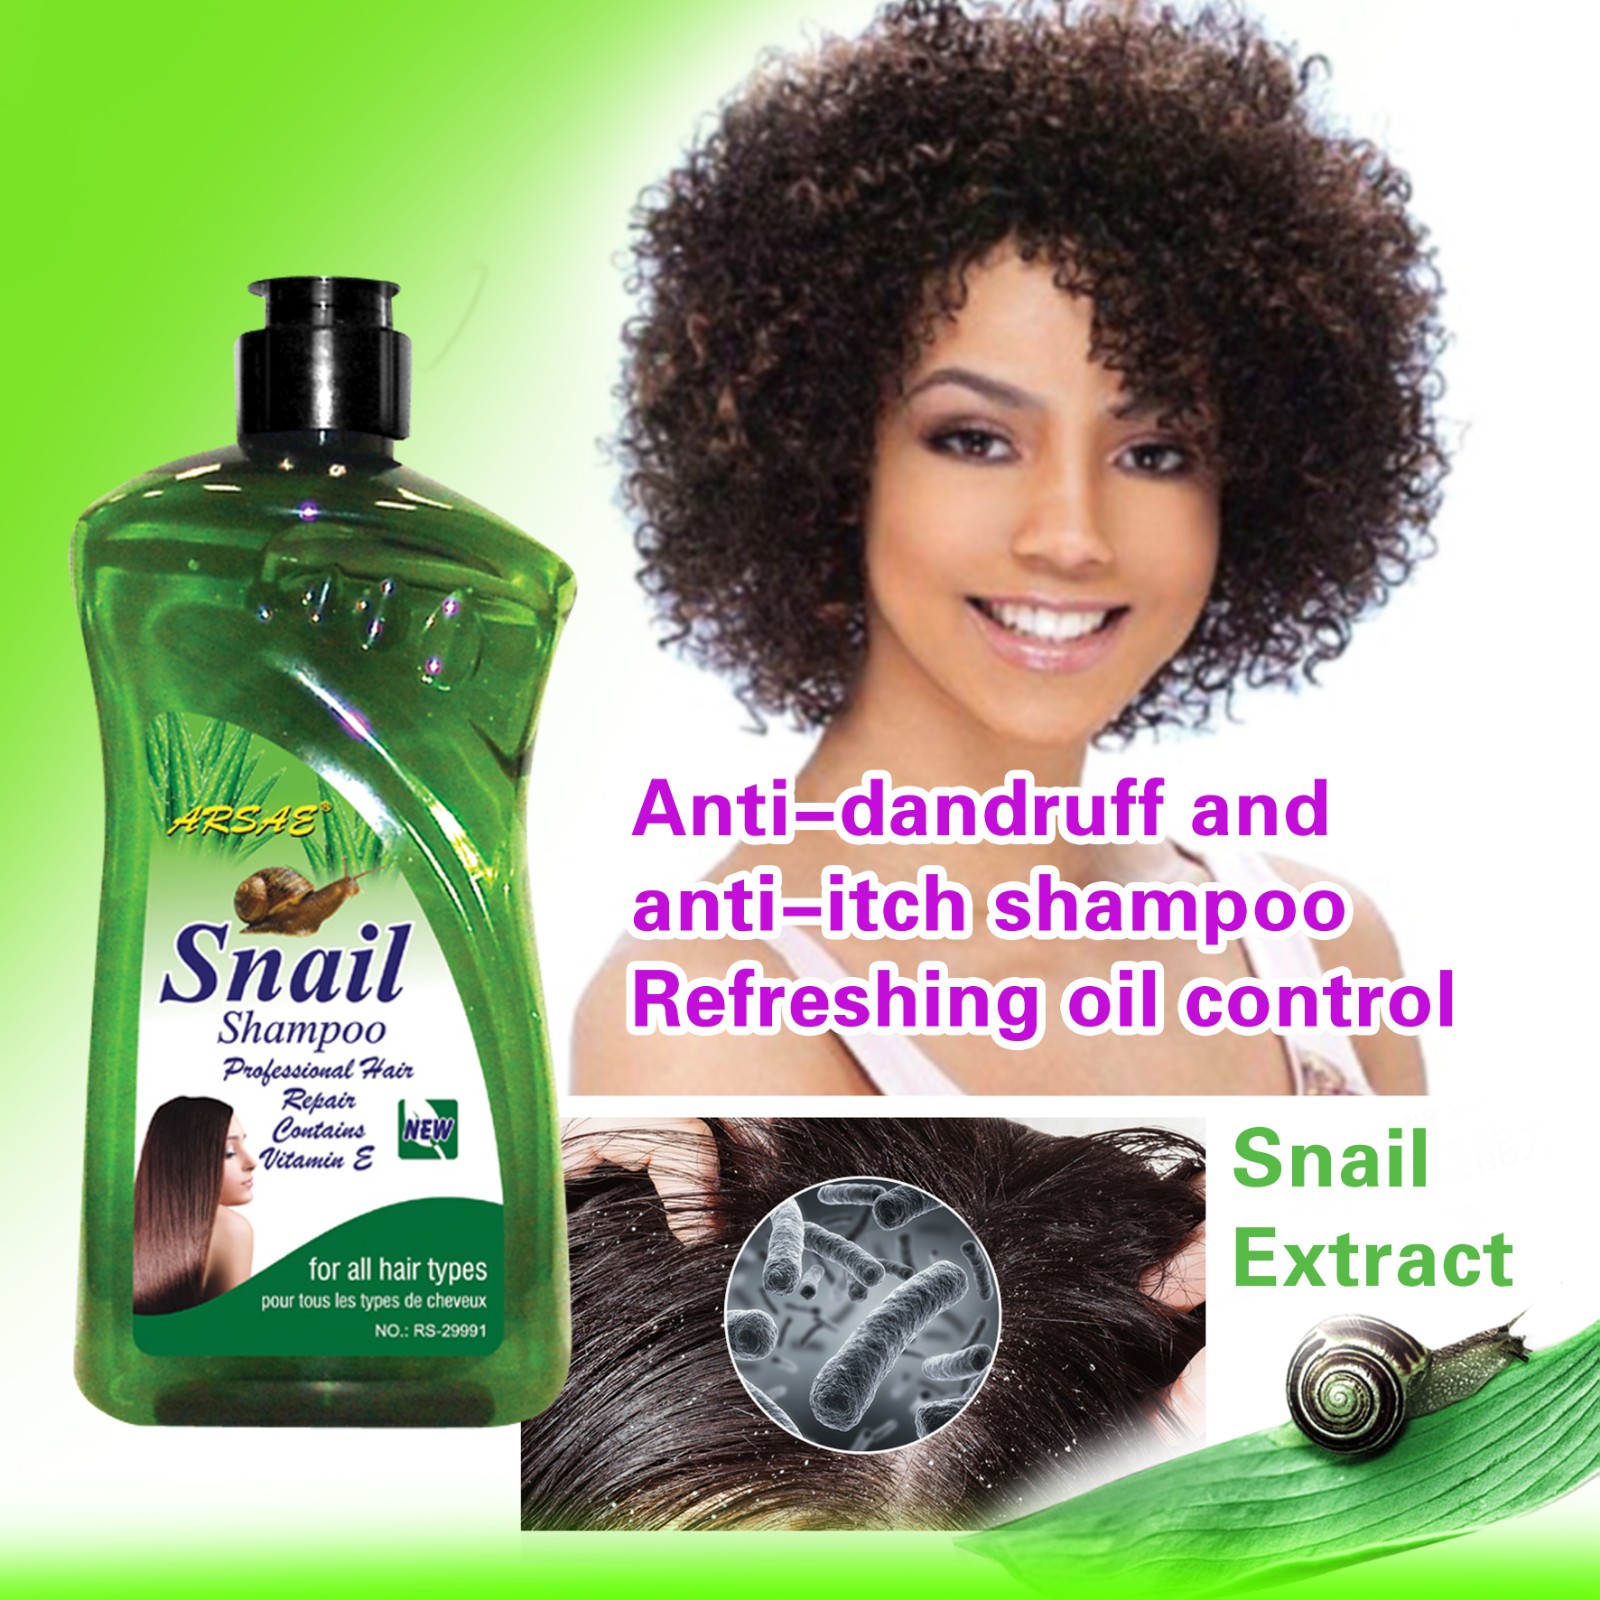 Snail shampoo